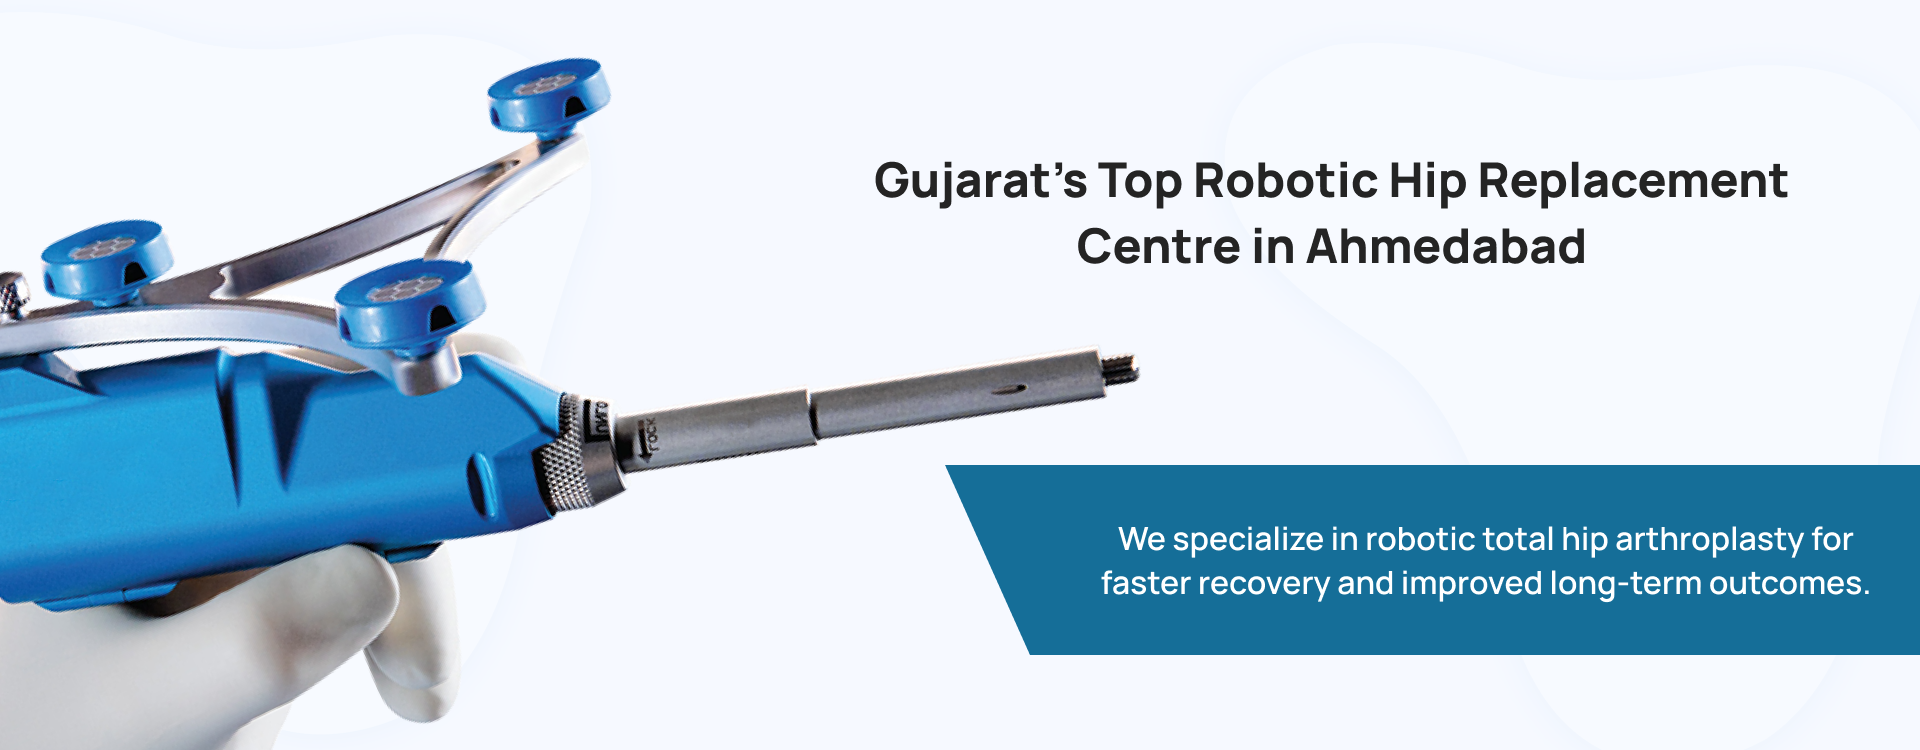 Guajarat Top Robotic Replacement Centre in Ahmedabad